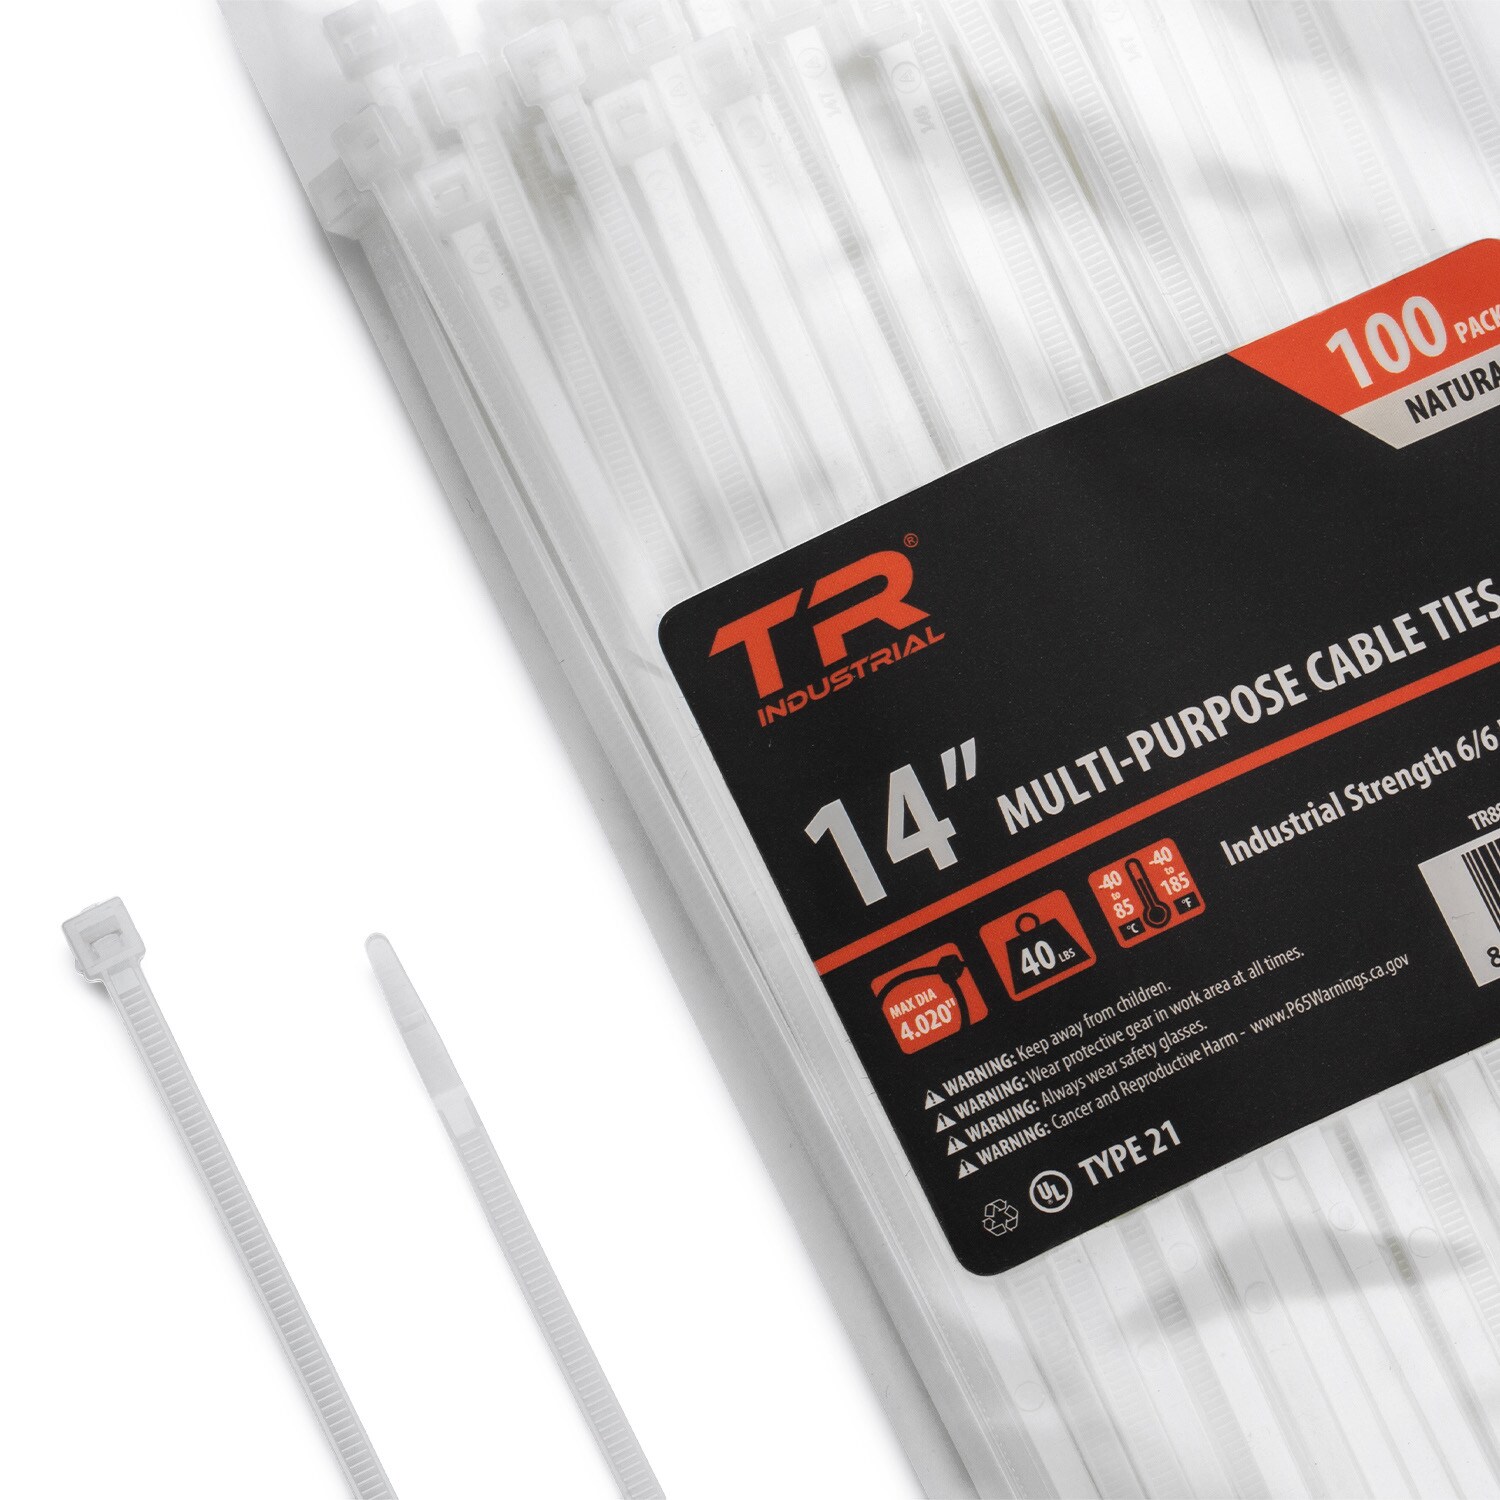 Nylon Cable Ties 4-18-N-1000-4" Natural/White 10,000Ct 18lb Tensile 1000 Pack 